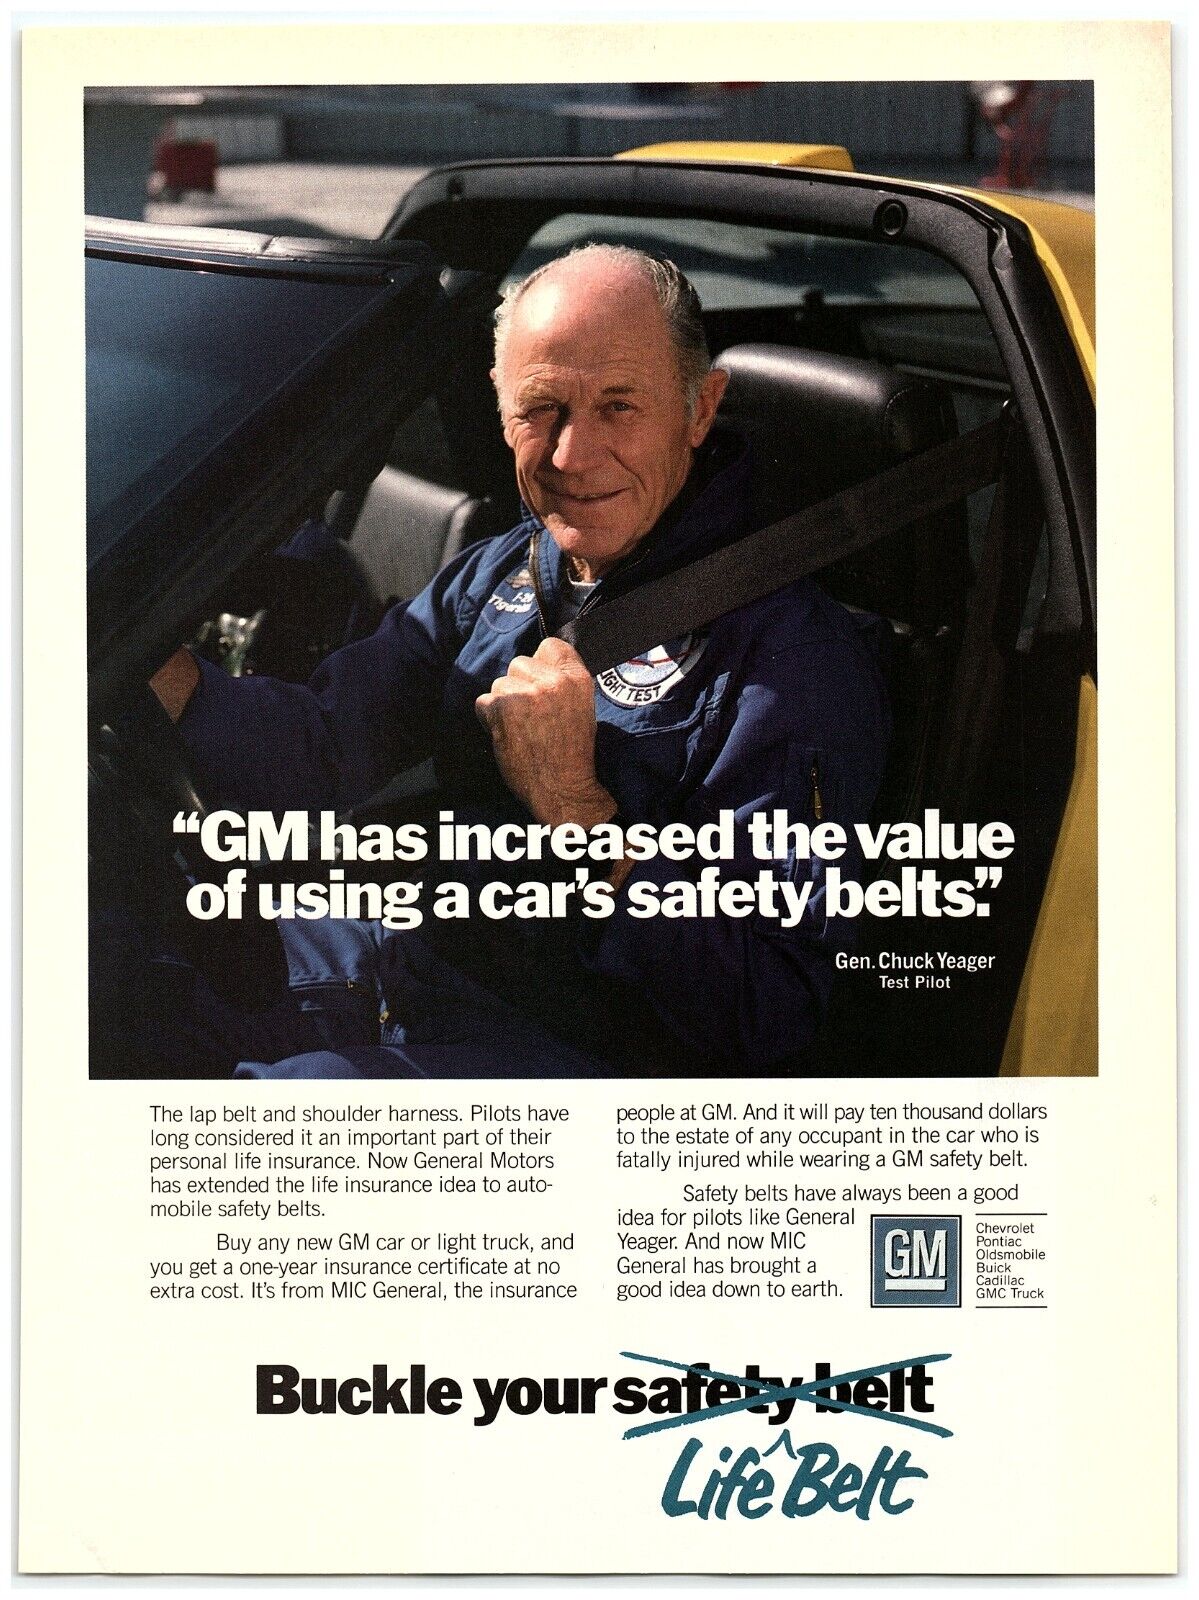 1986 GM Print Ad, Gen. Chuck Yeager Test Pilot Car Safety Belts Fist Convertible